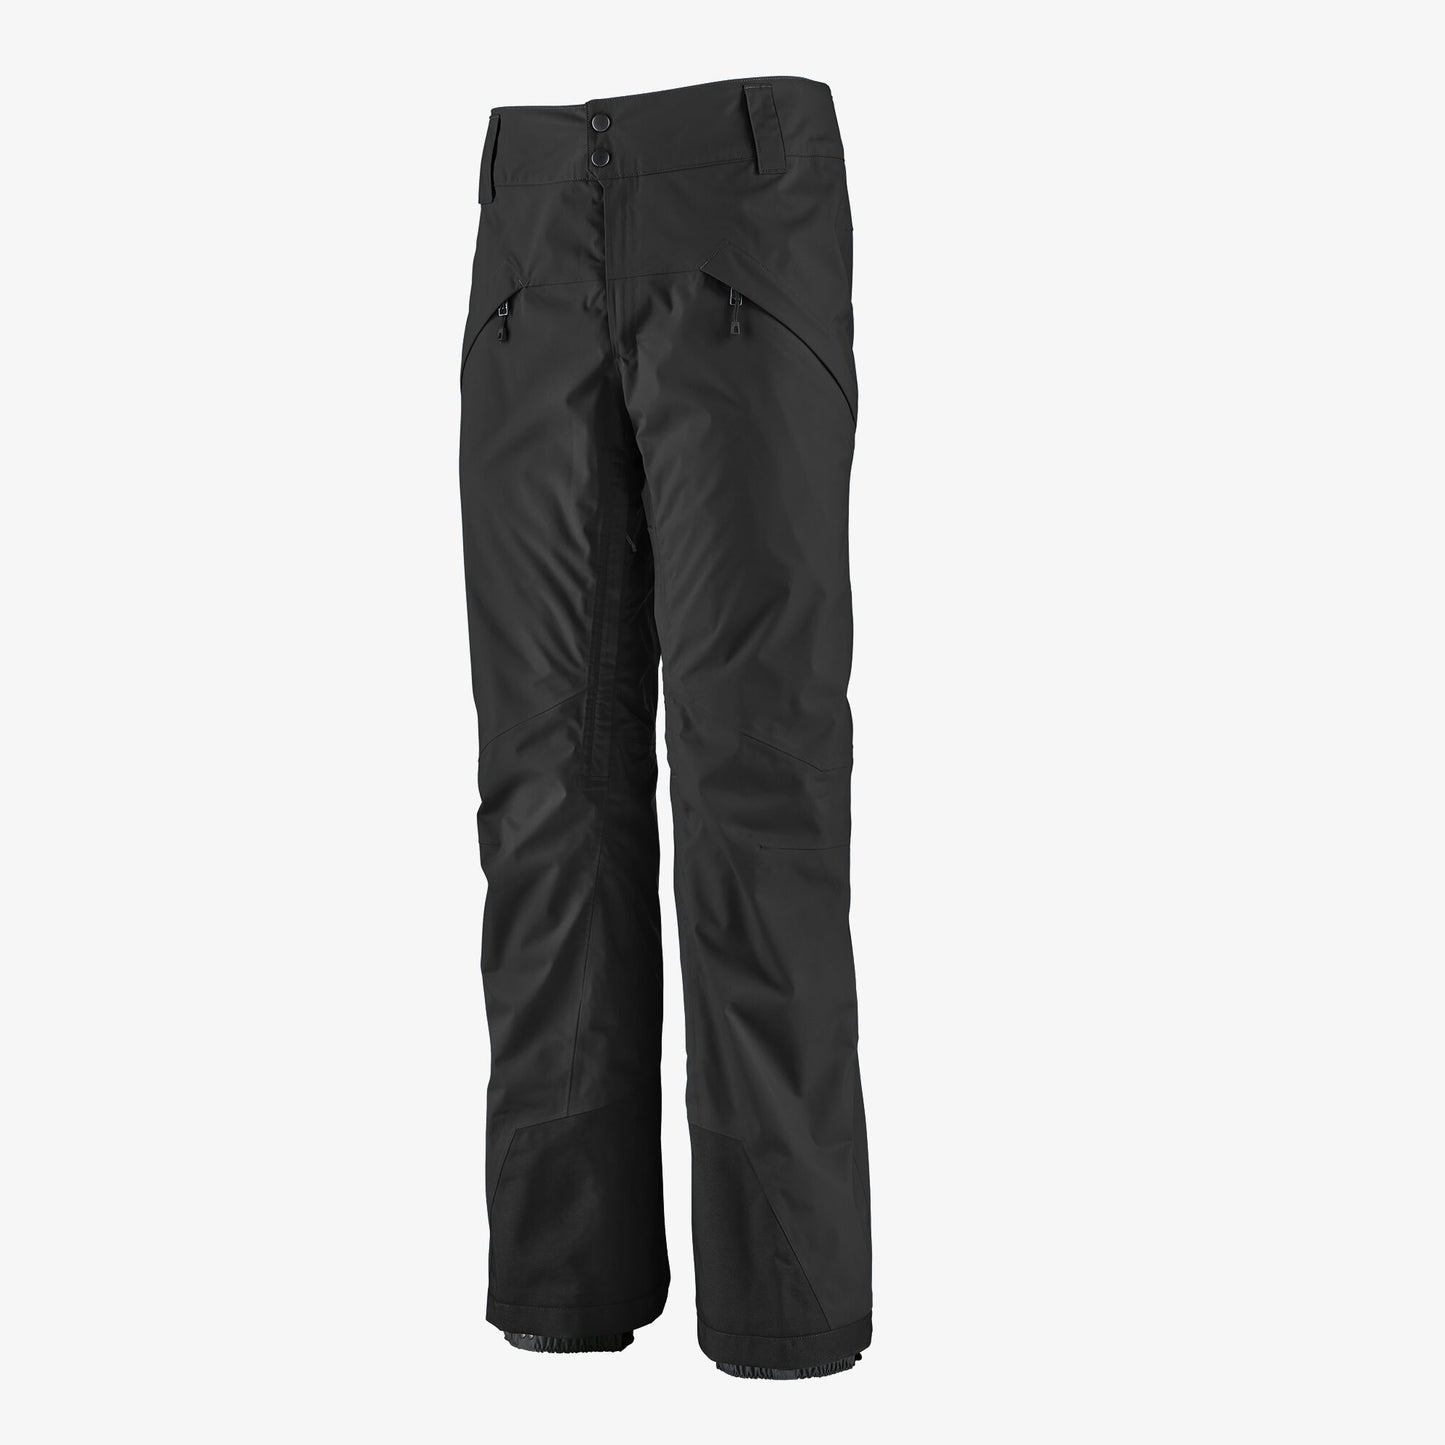 Patagonia Men's Snowshot Pants - Short